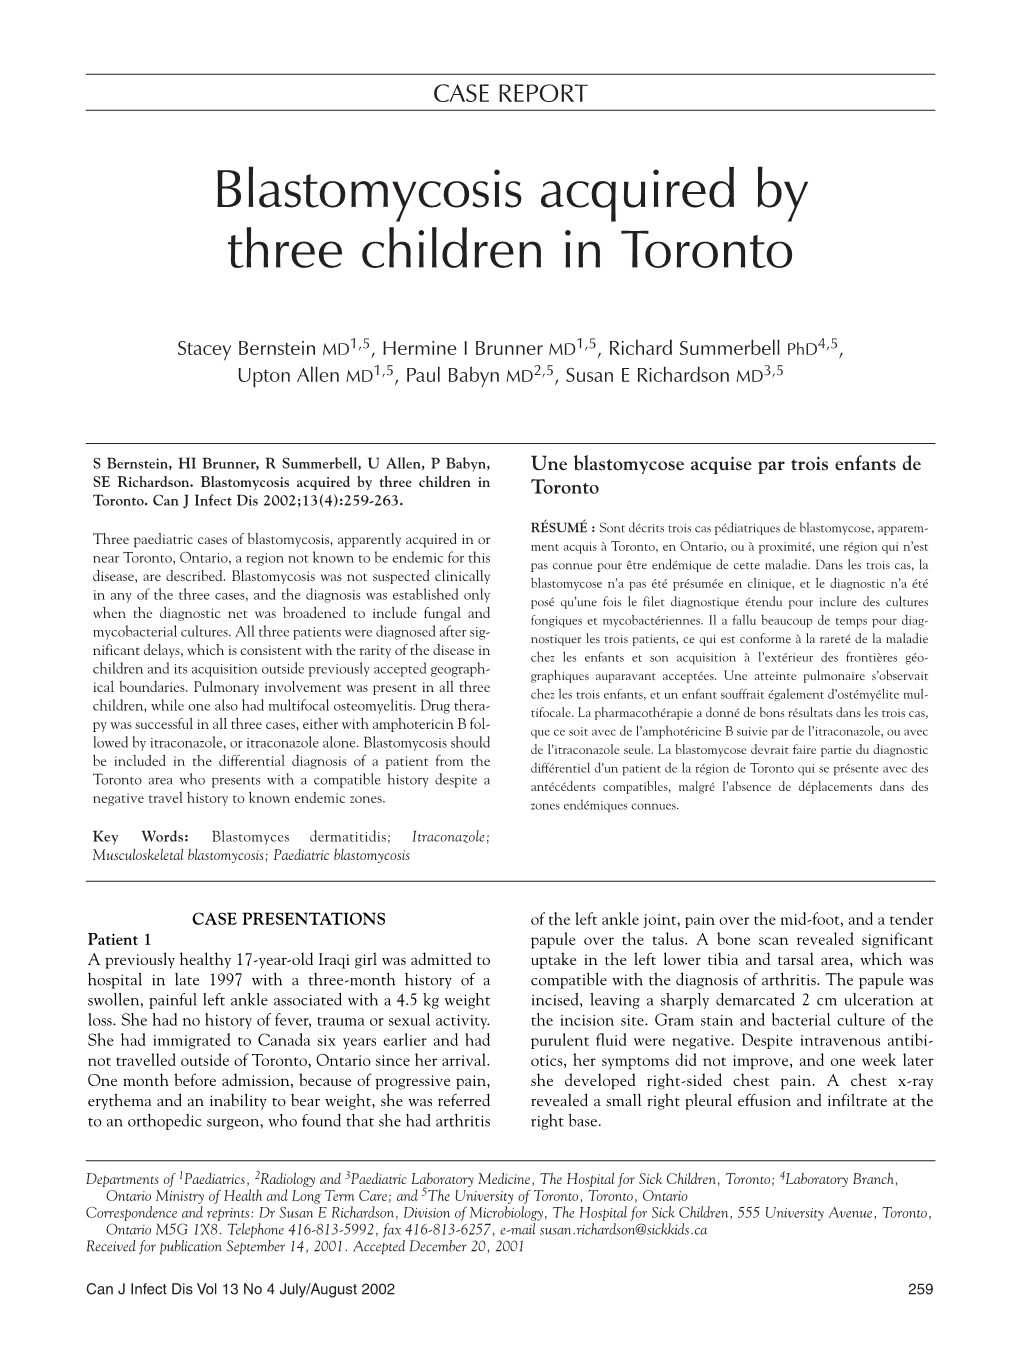 Blastomycosis Acquired by Three Children in Toronto